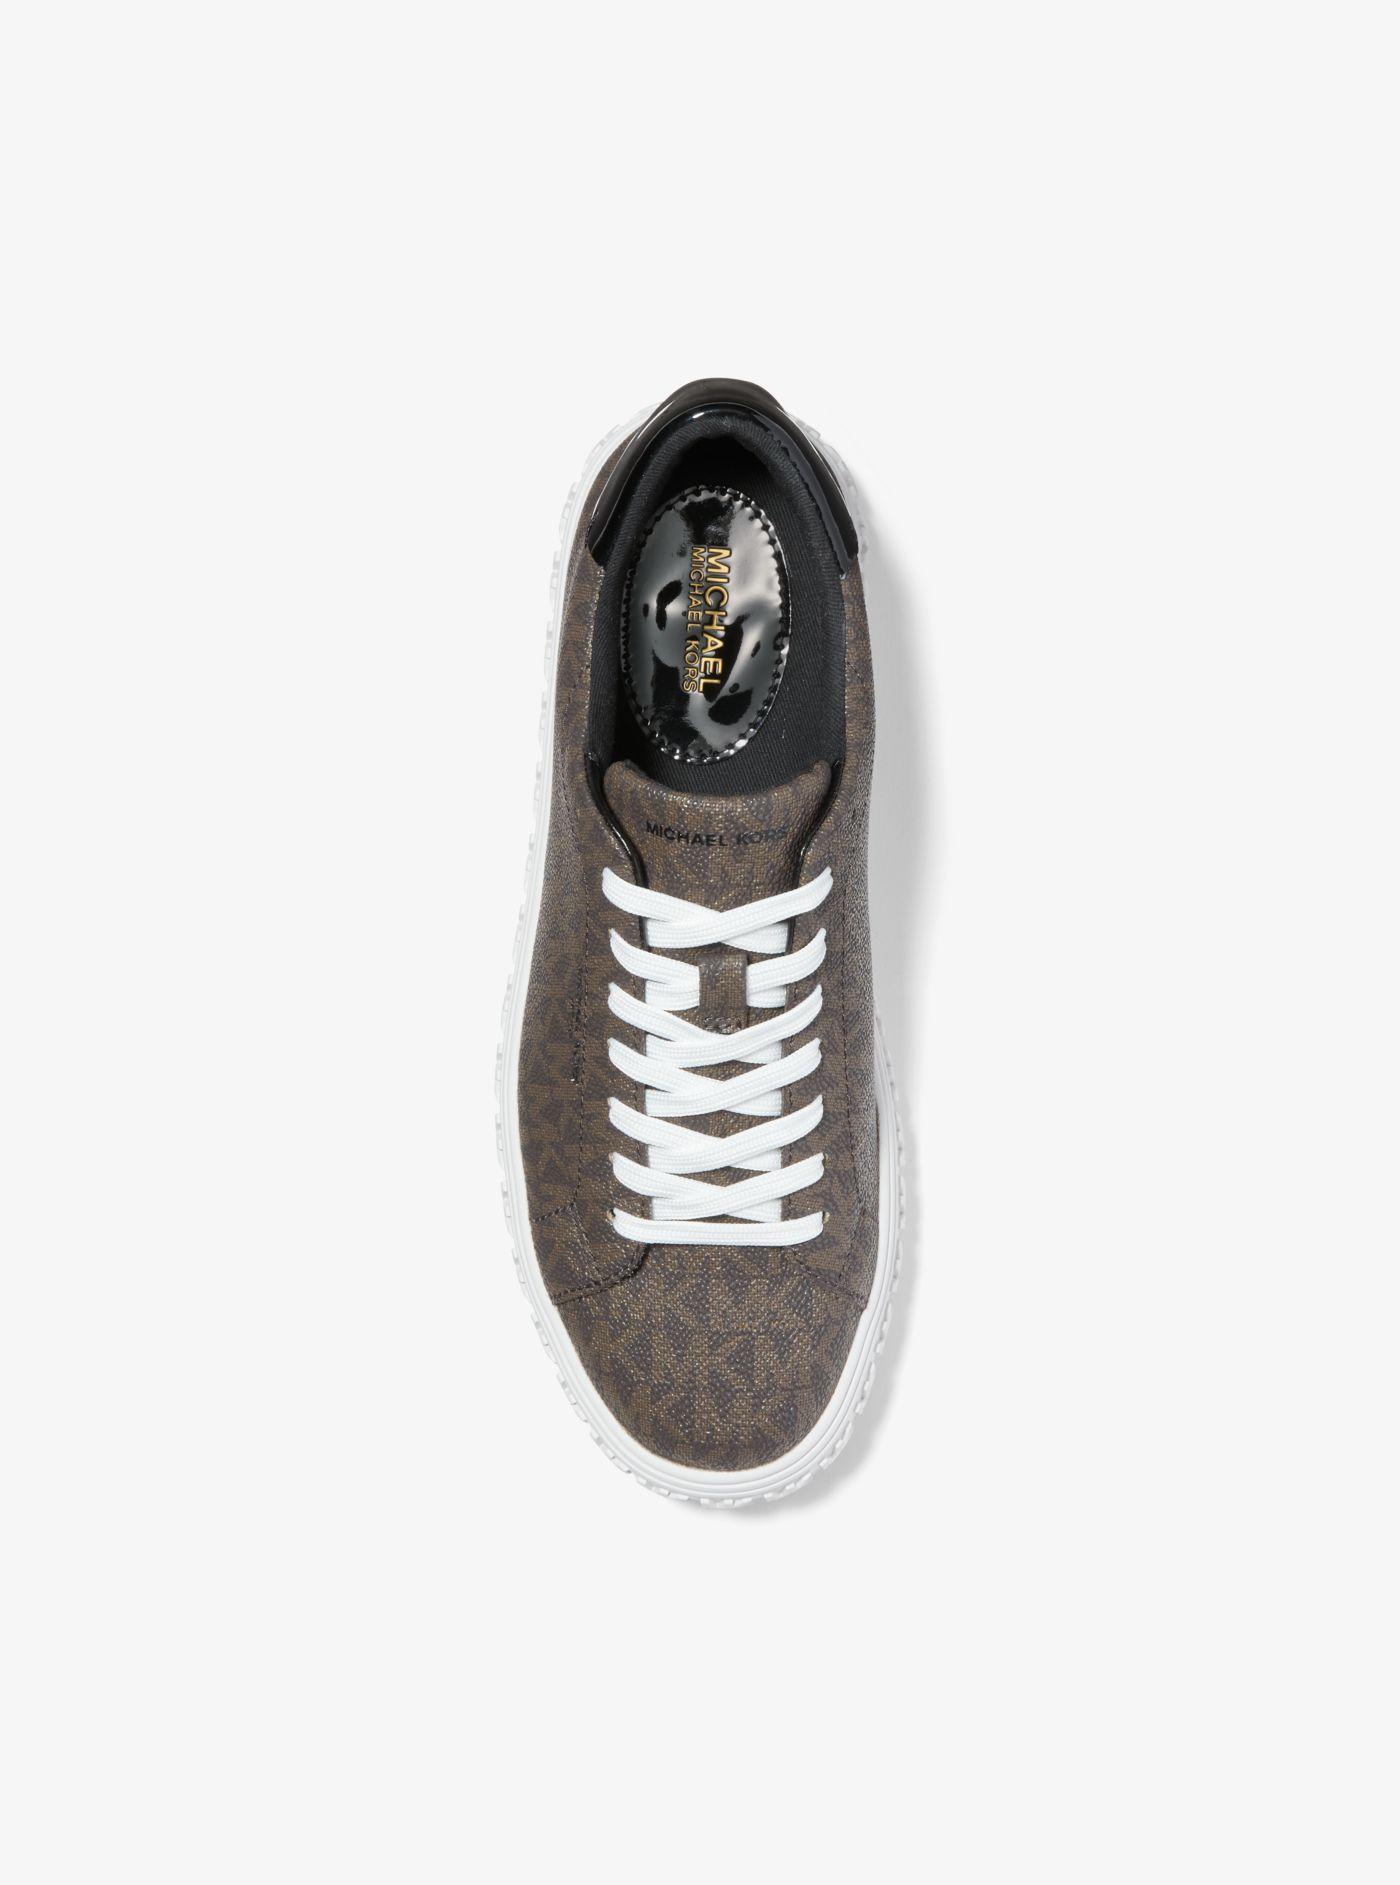 Michael Kors Grove Logo Sneaker in Brown | Lyst